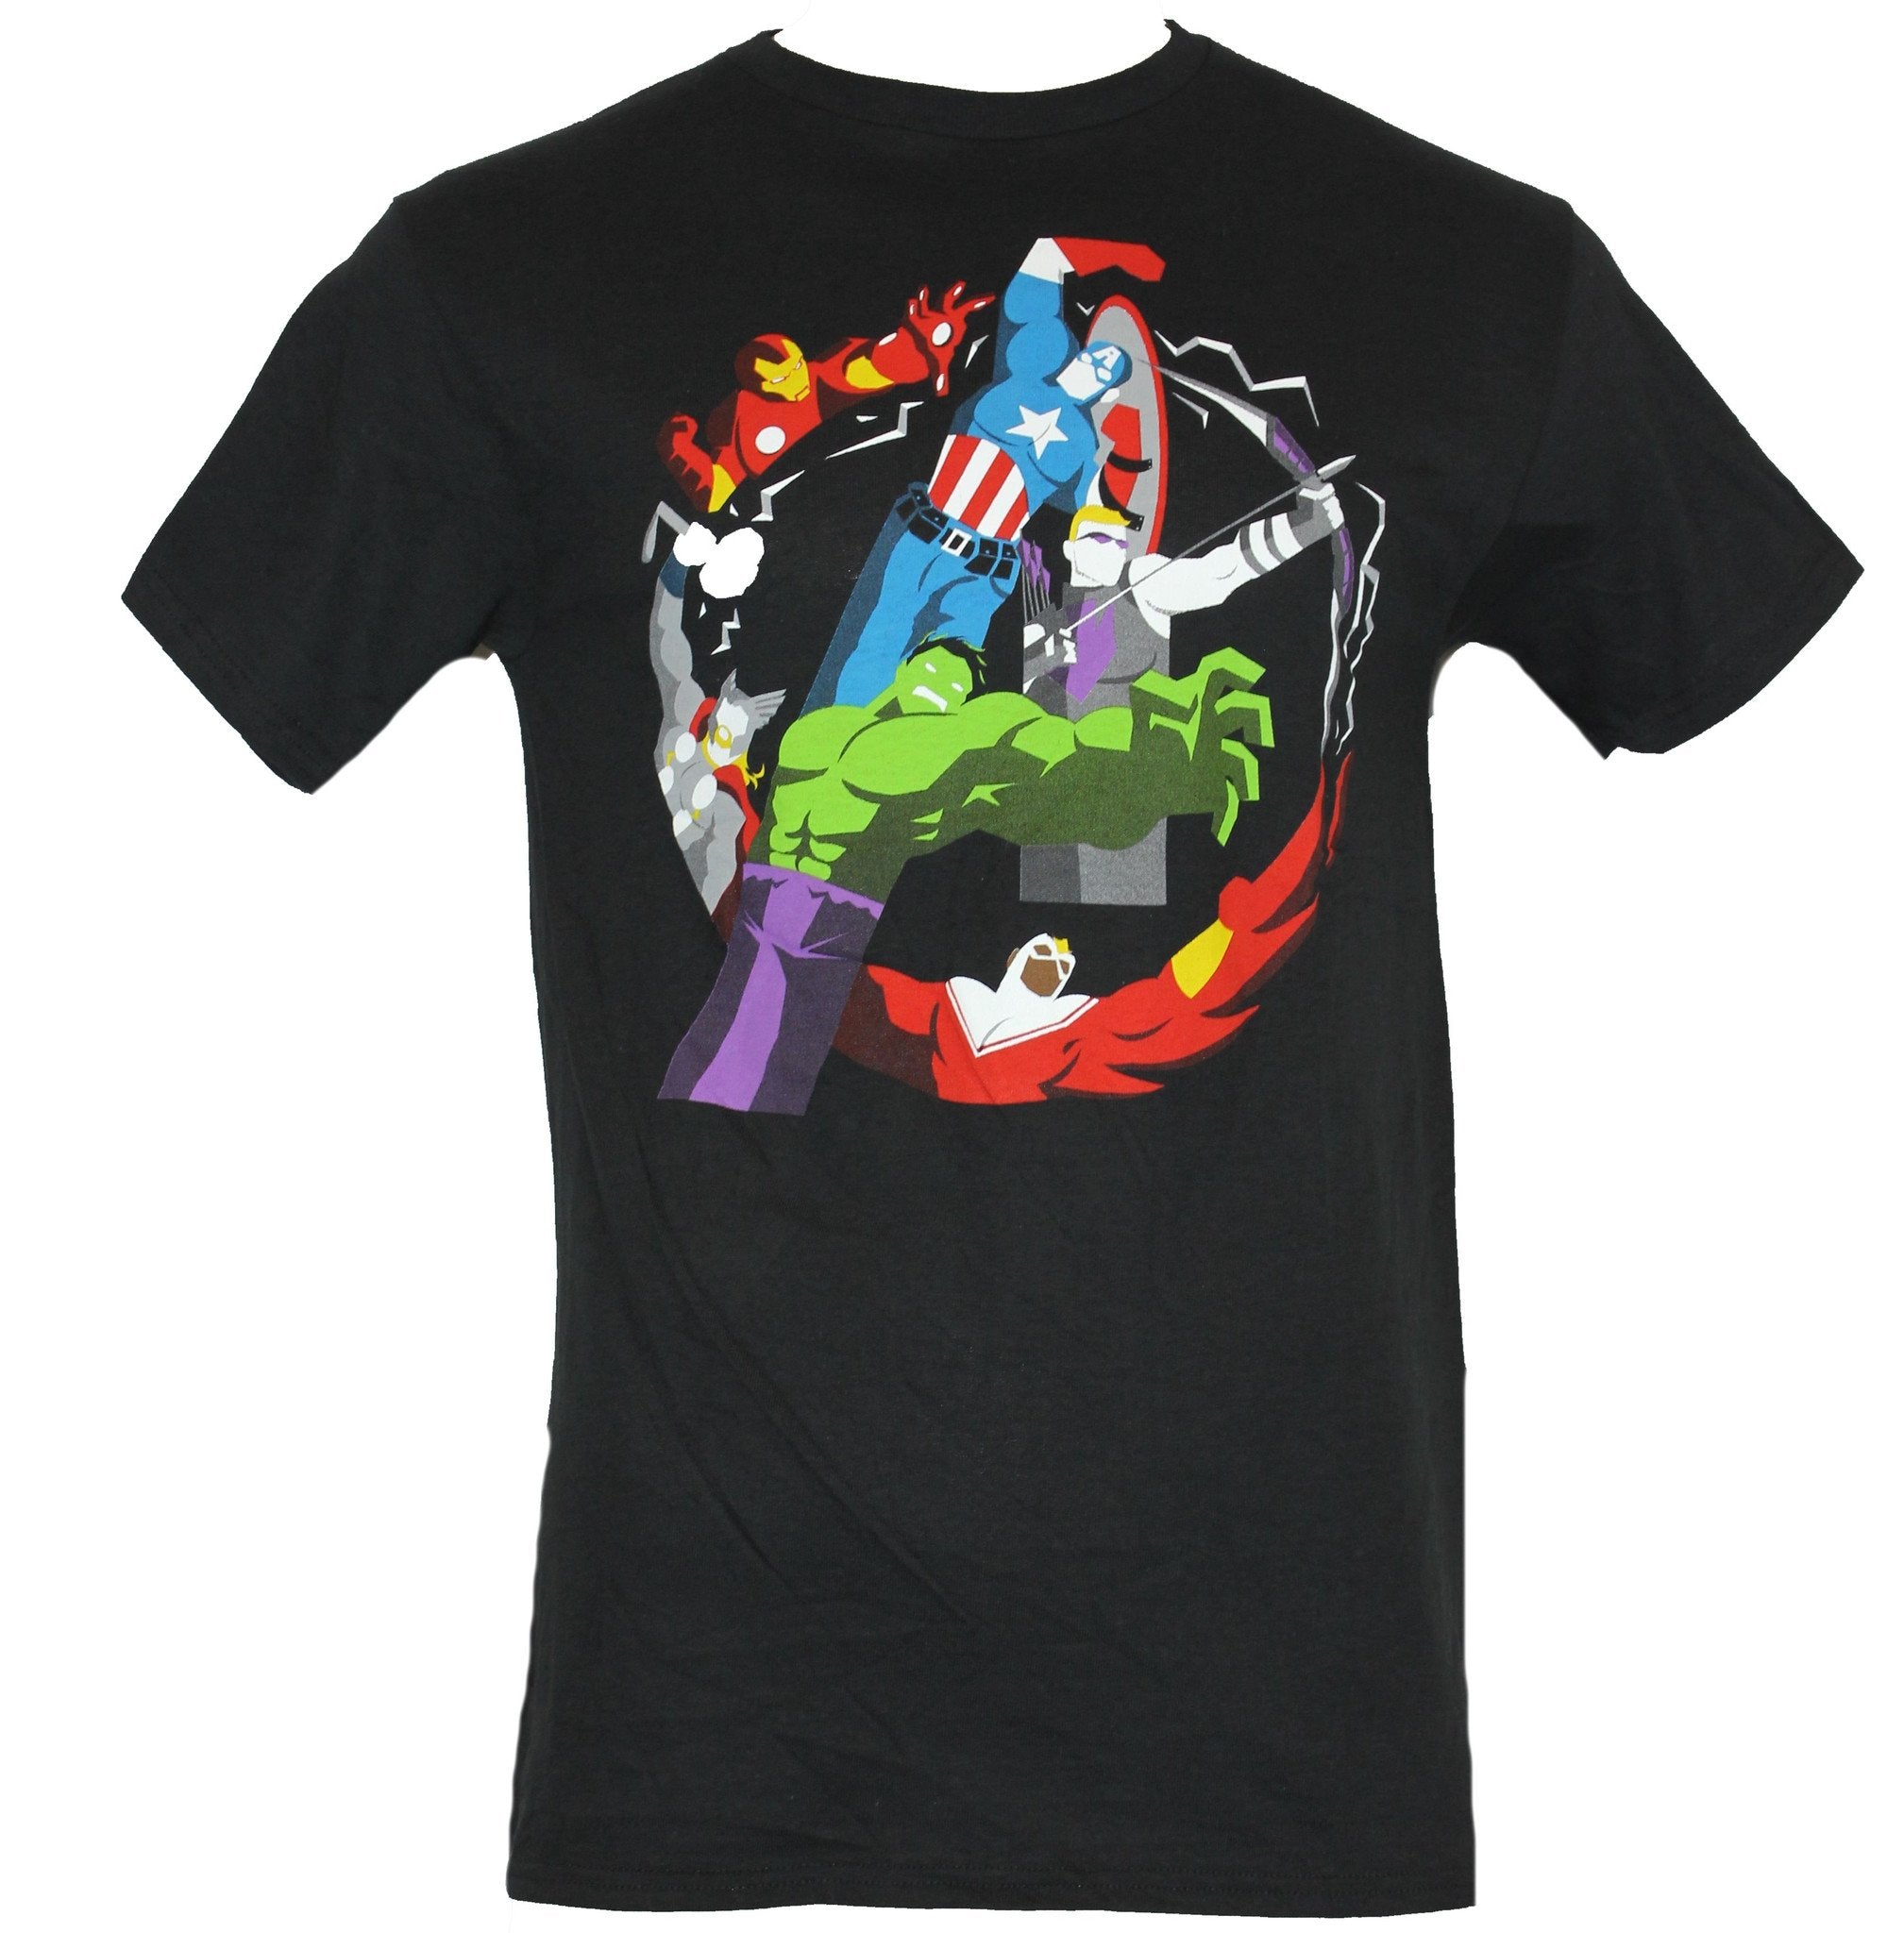 The Avengers (Marvel Comics) Mens T-Shirt - Minamalist Heros Forming Logo Image